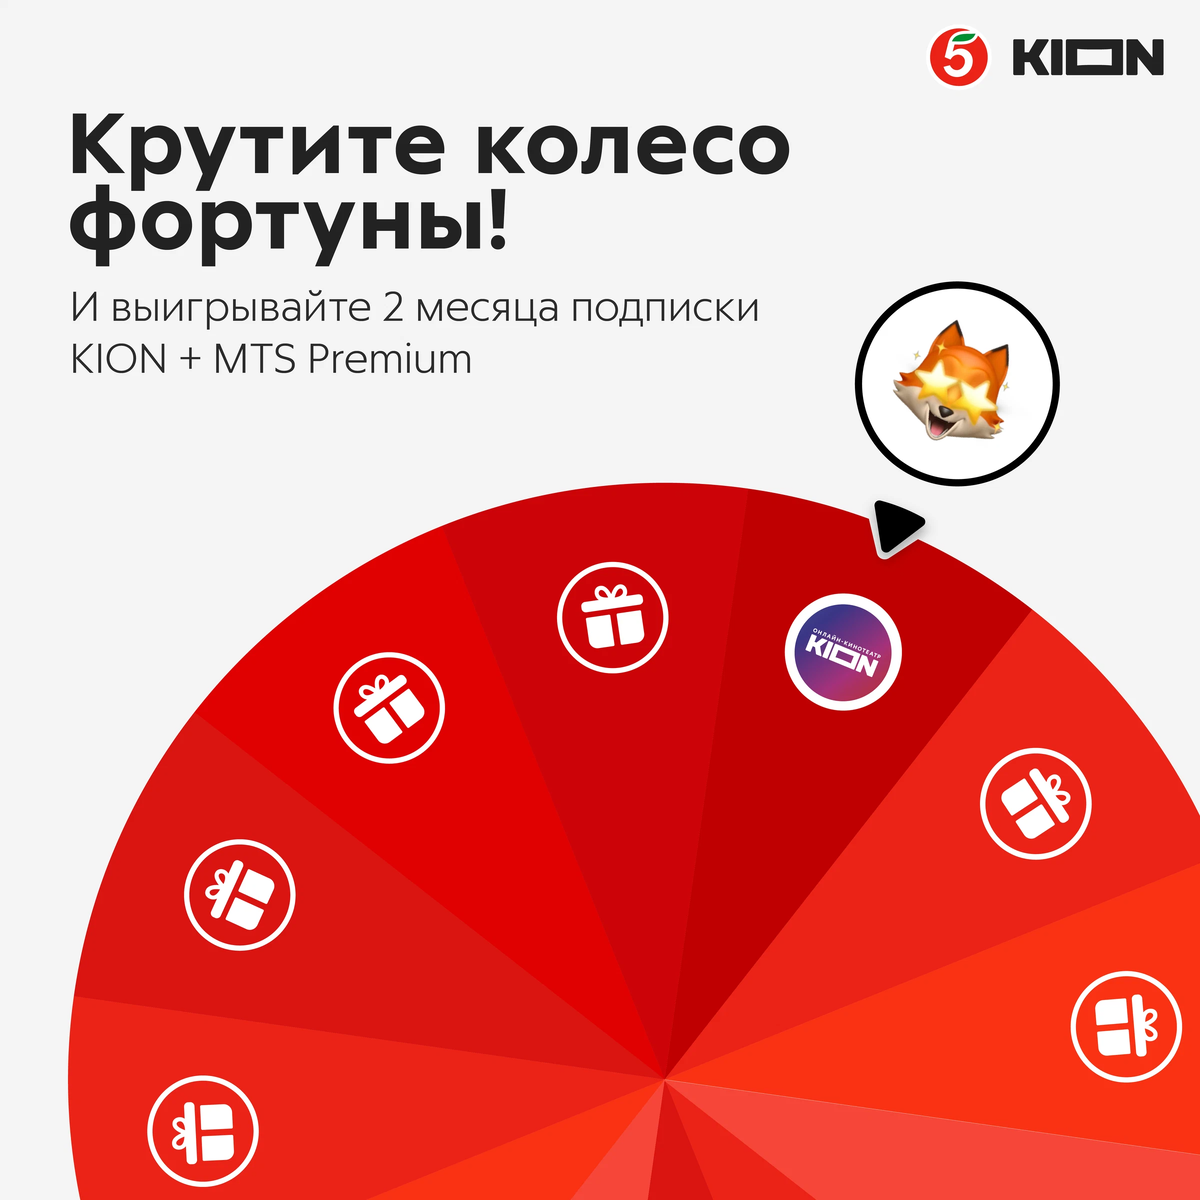 Мтс премиум подписка промокод на бесплатную подписку. Kion МТС. Kion Premium МТС. МТС Premium логотип.